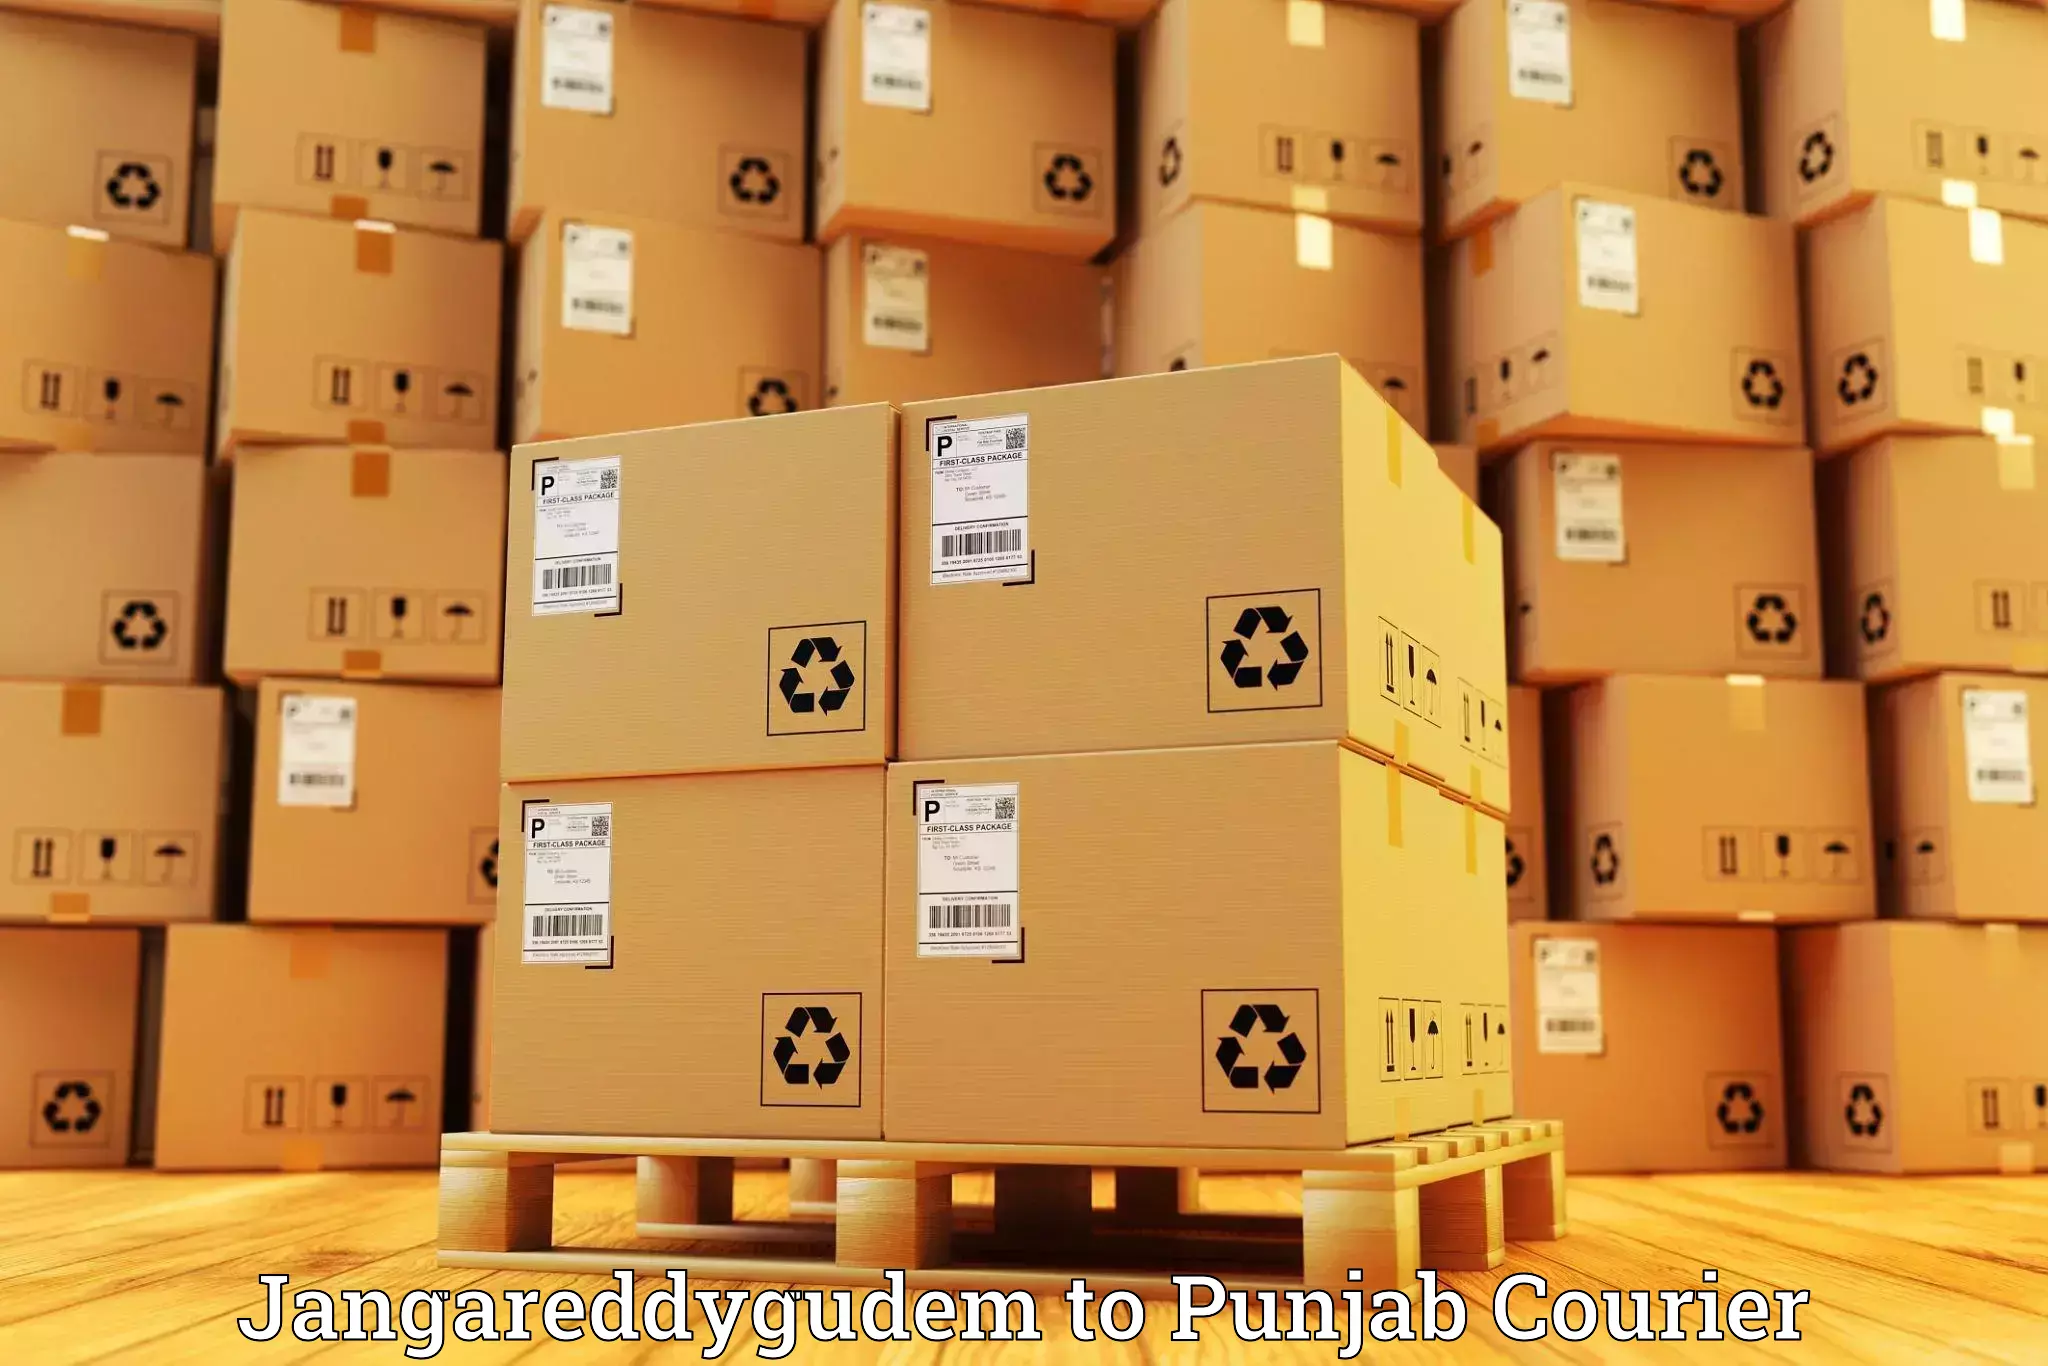 Doorstep delivery service Jangareddygudem to Central University of Punjab Bathinda